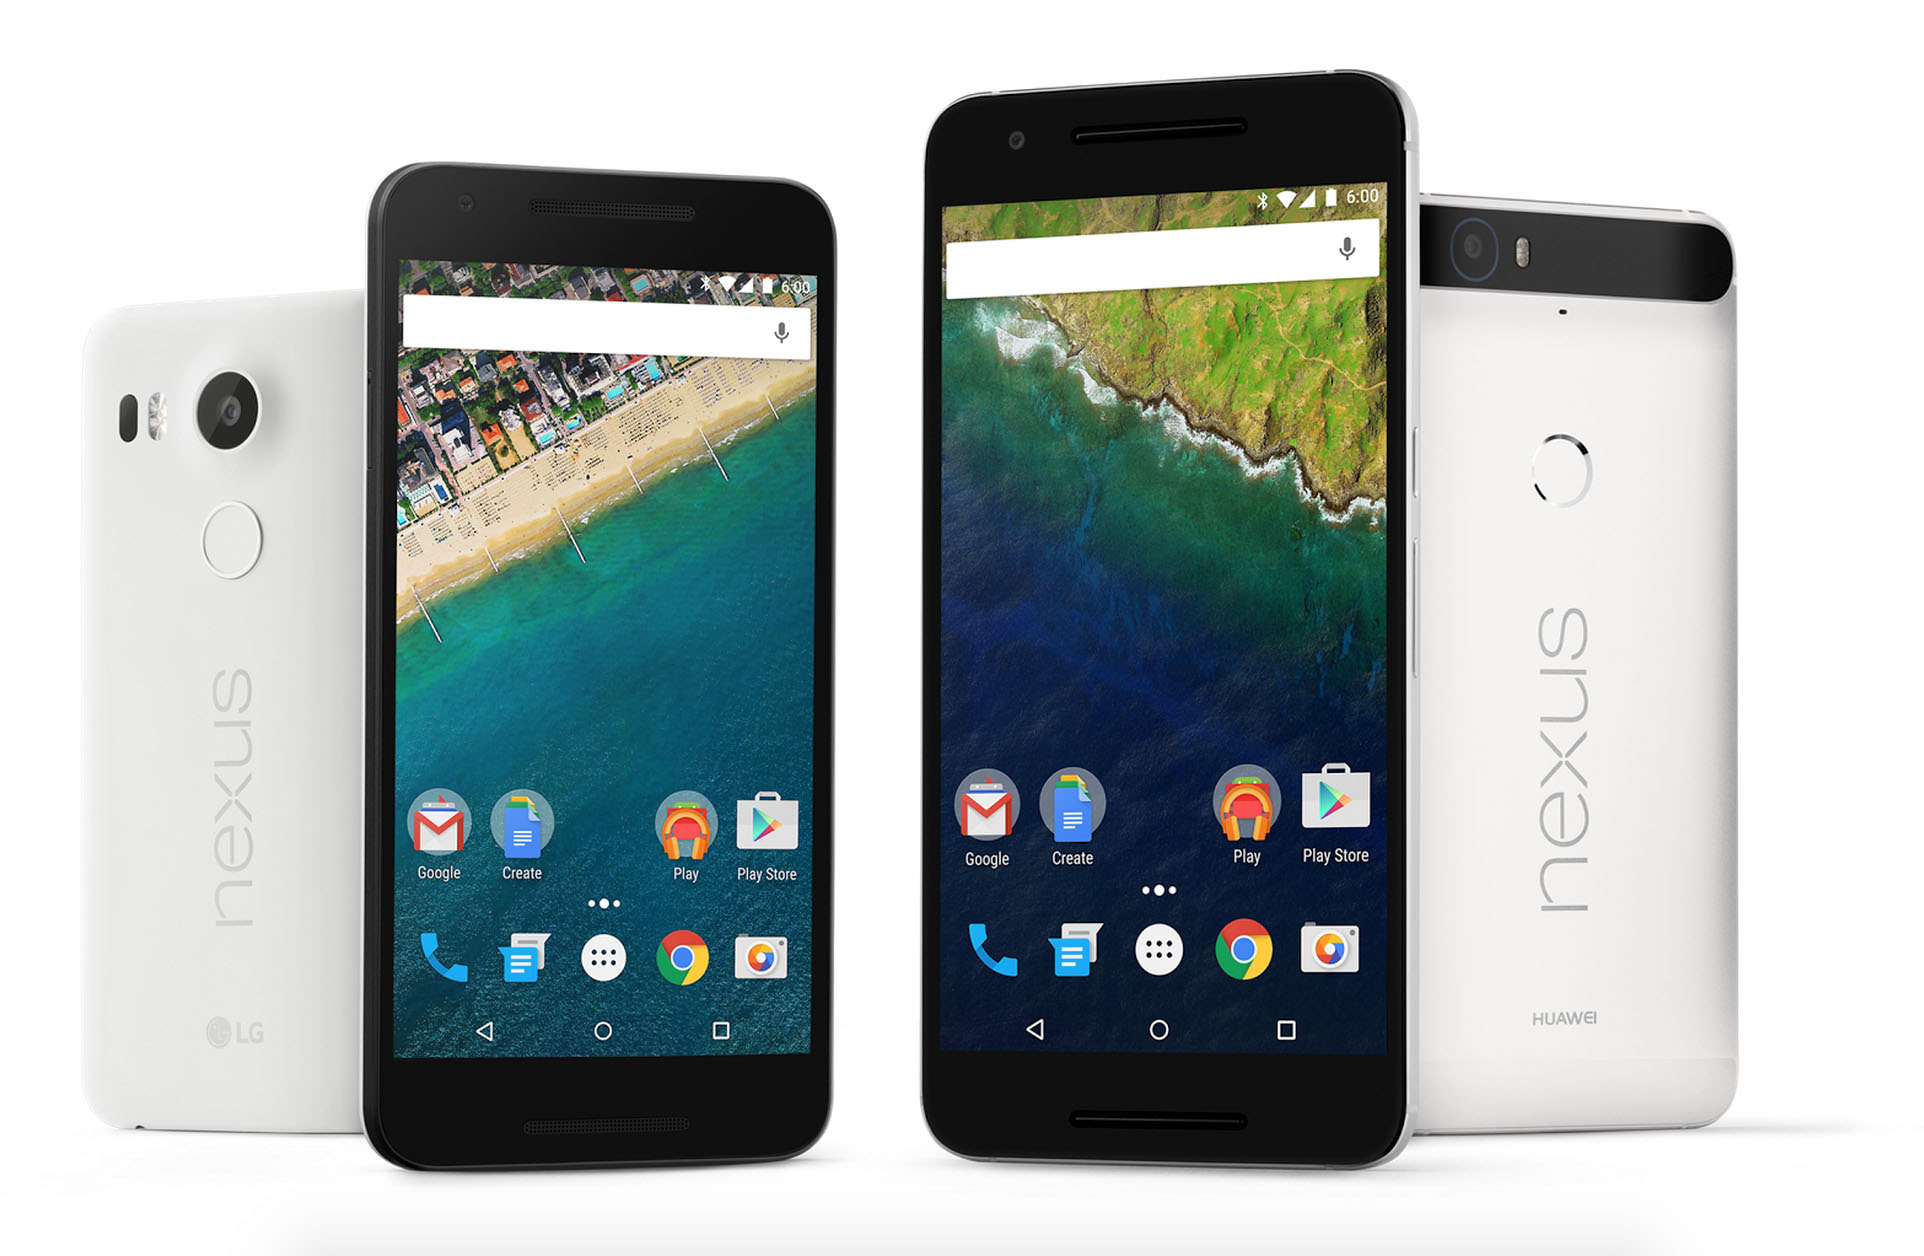 Parpadeo retorta volverse loco Google unveils the Nexus 5X and Nexus 6P - Metro Weekly